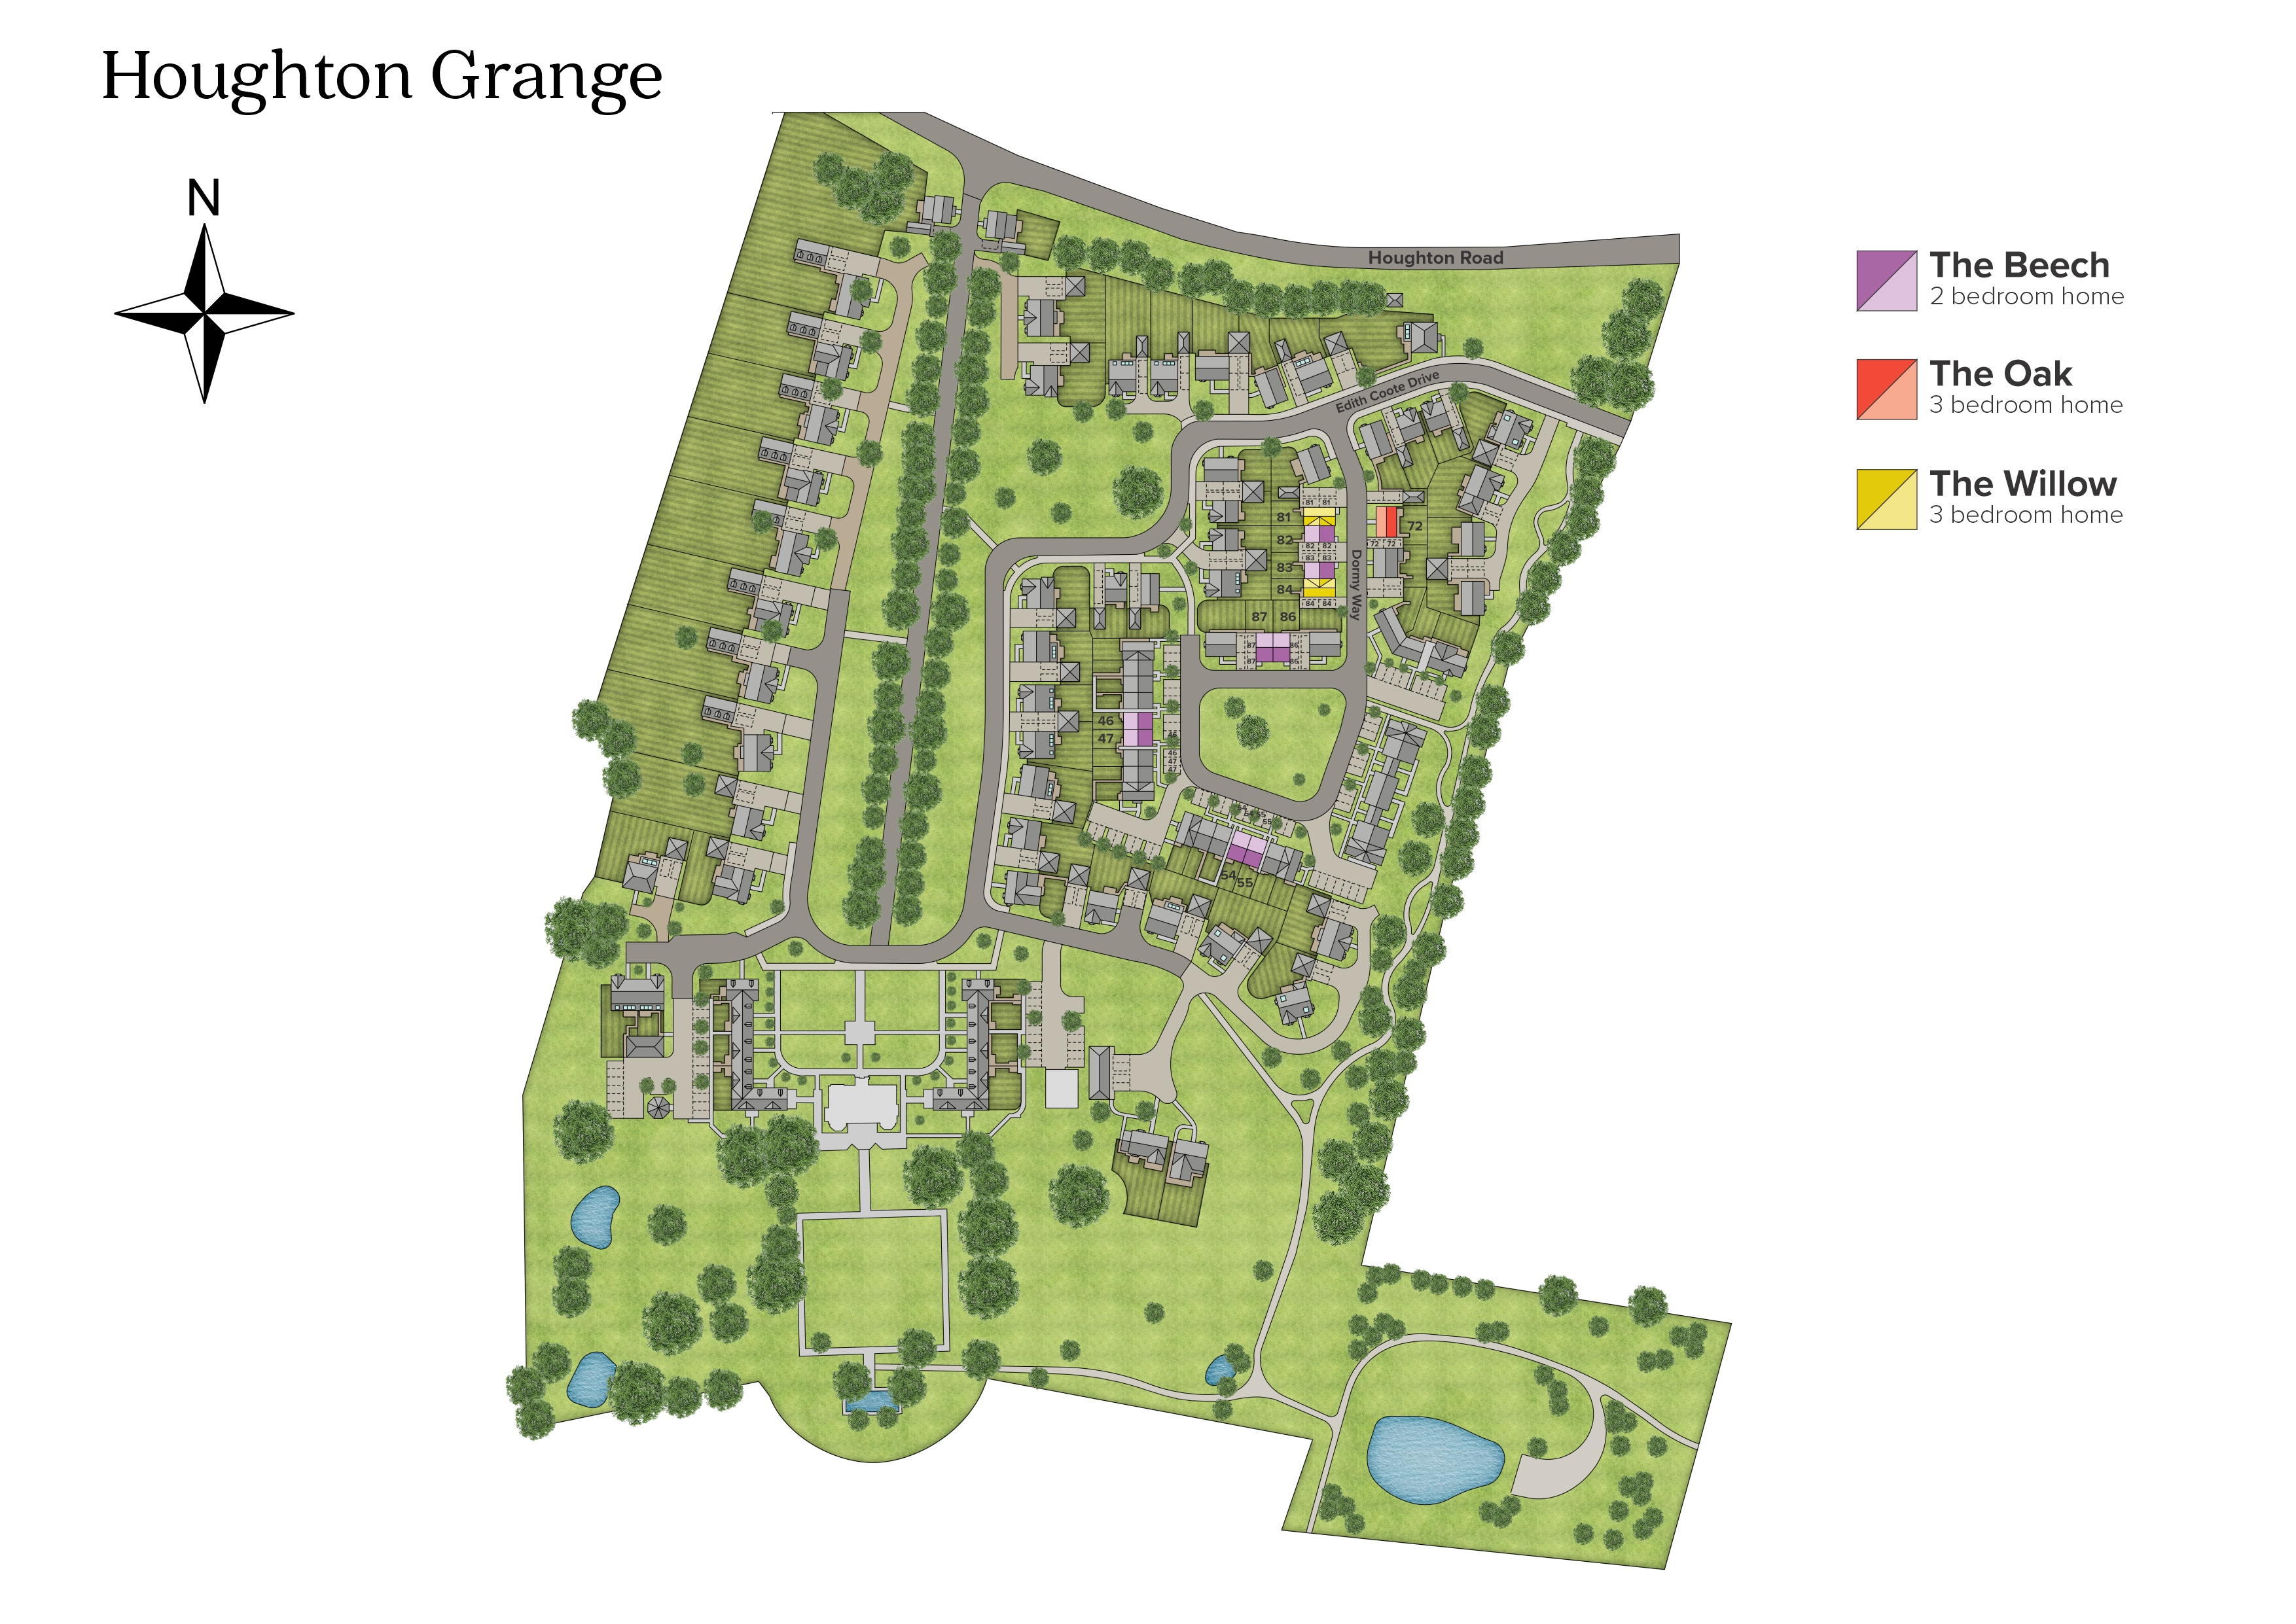 Houghton Grange development plan